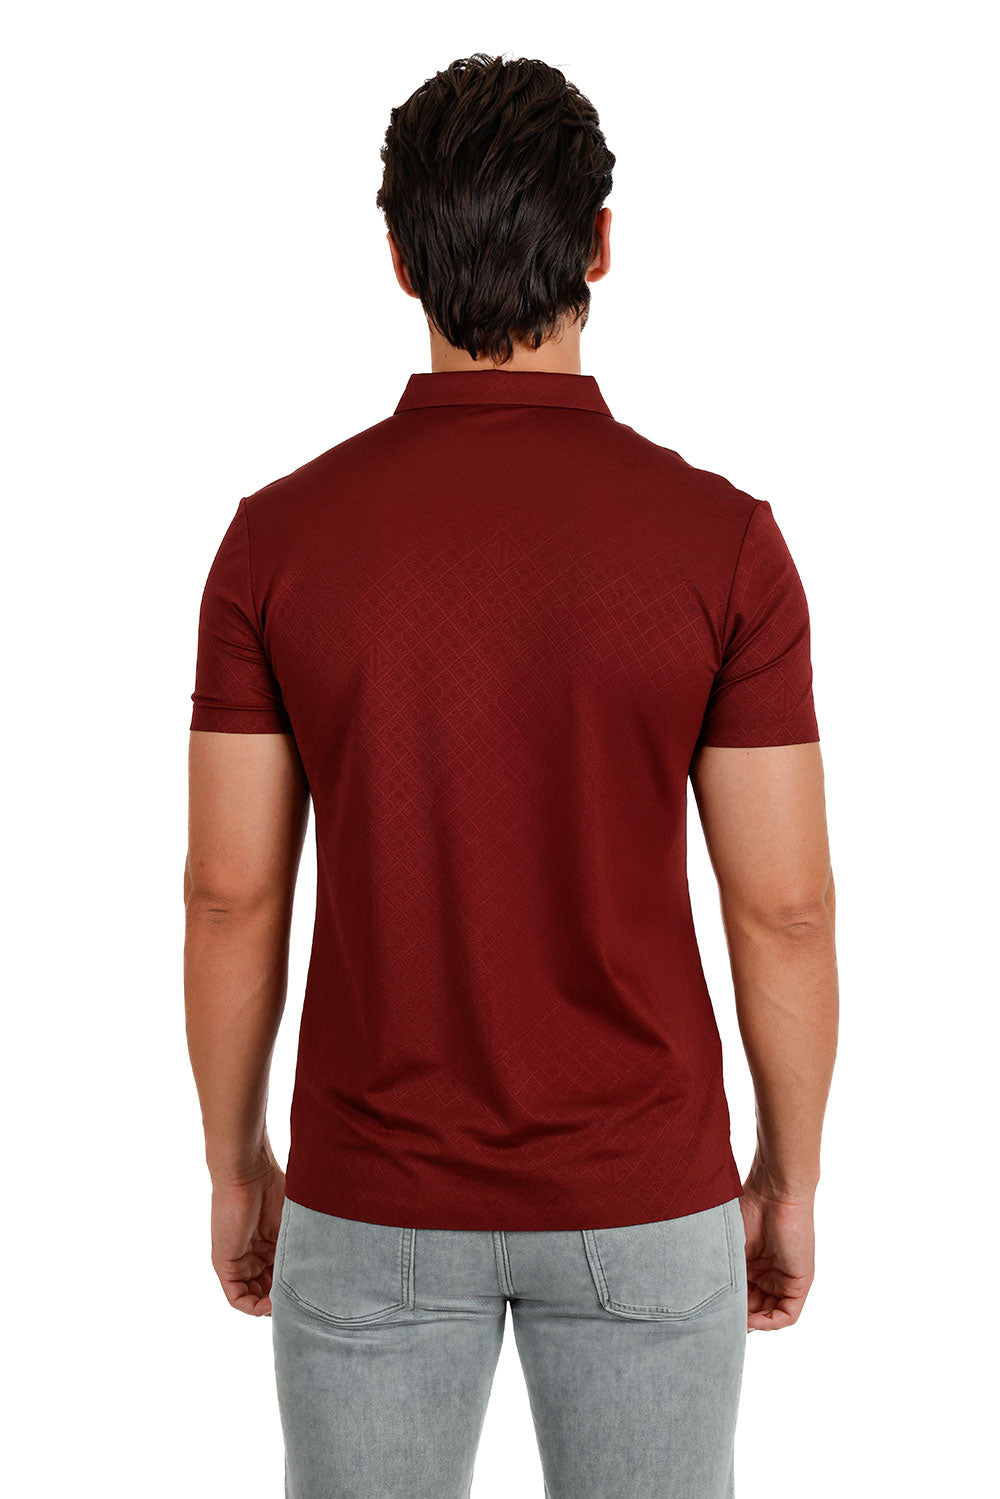 Barabas Men's Premium Solid Diamond Polo Short Sleeve Shirts 3P07 Wine